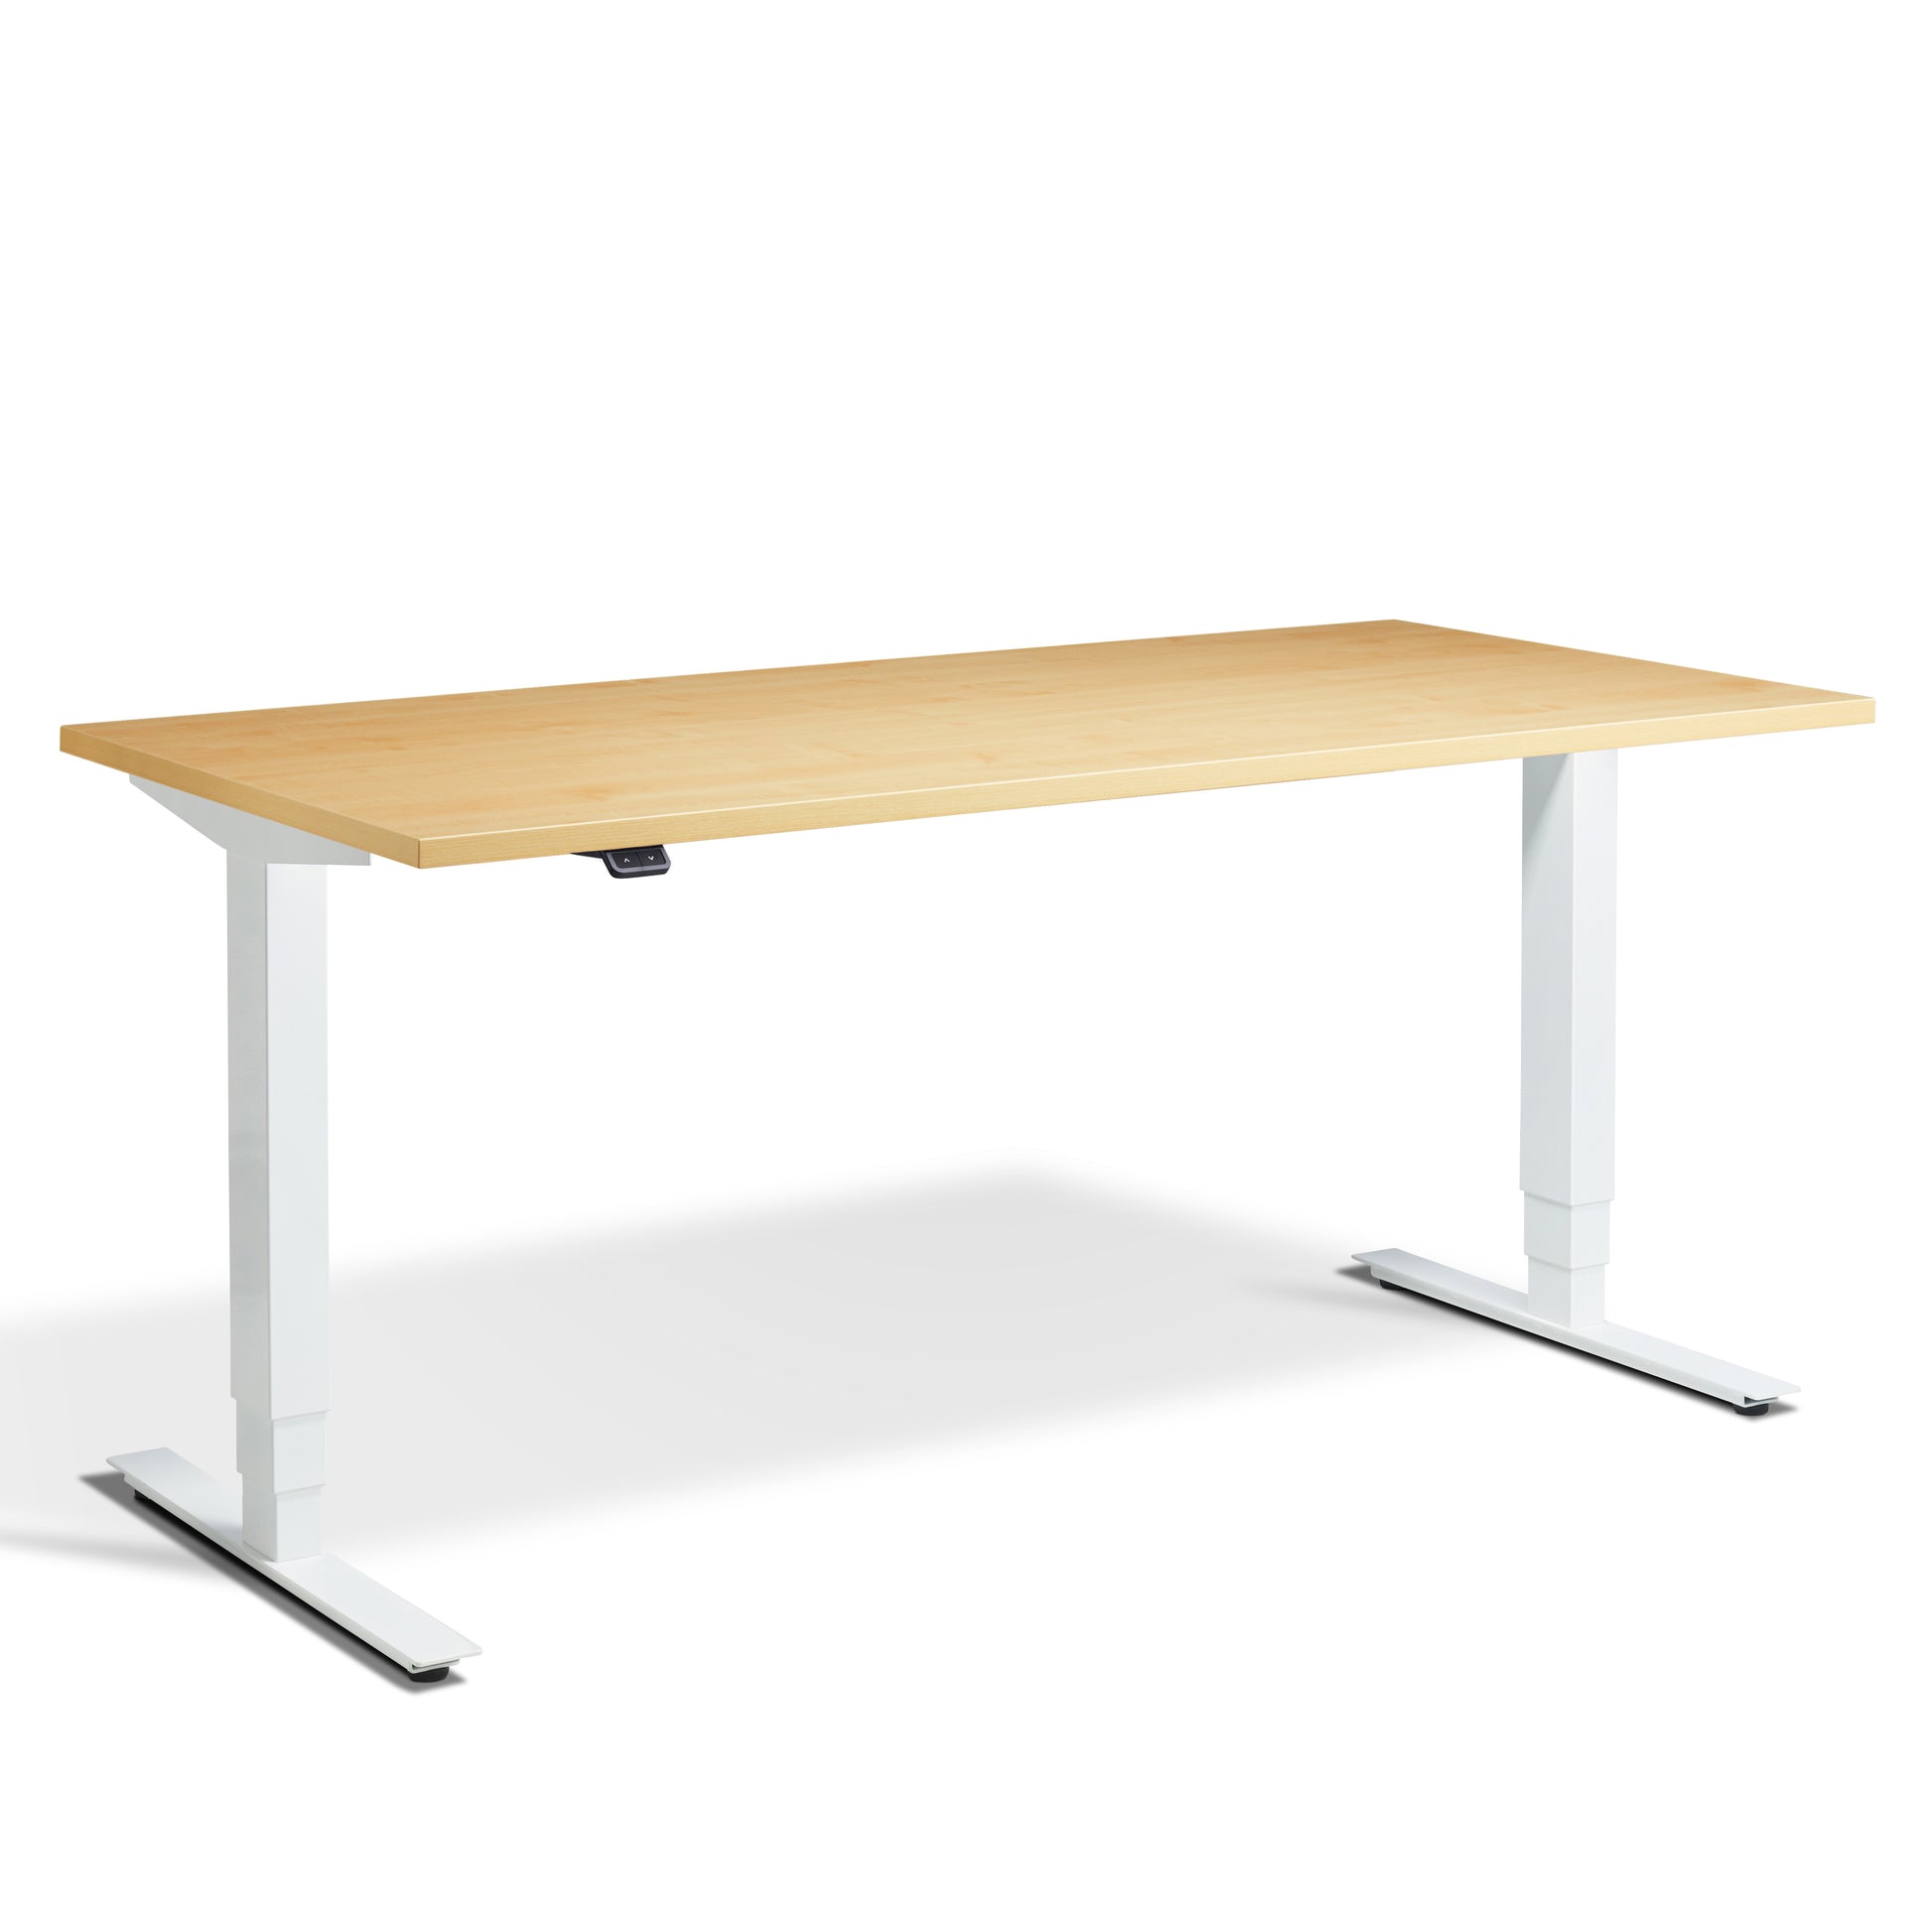 Aspen Electric Standing Desk - White & Oak - Desks - Standing - Electric | Tollo.co.uk  